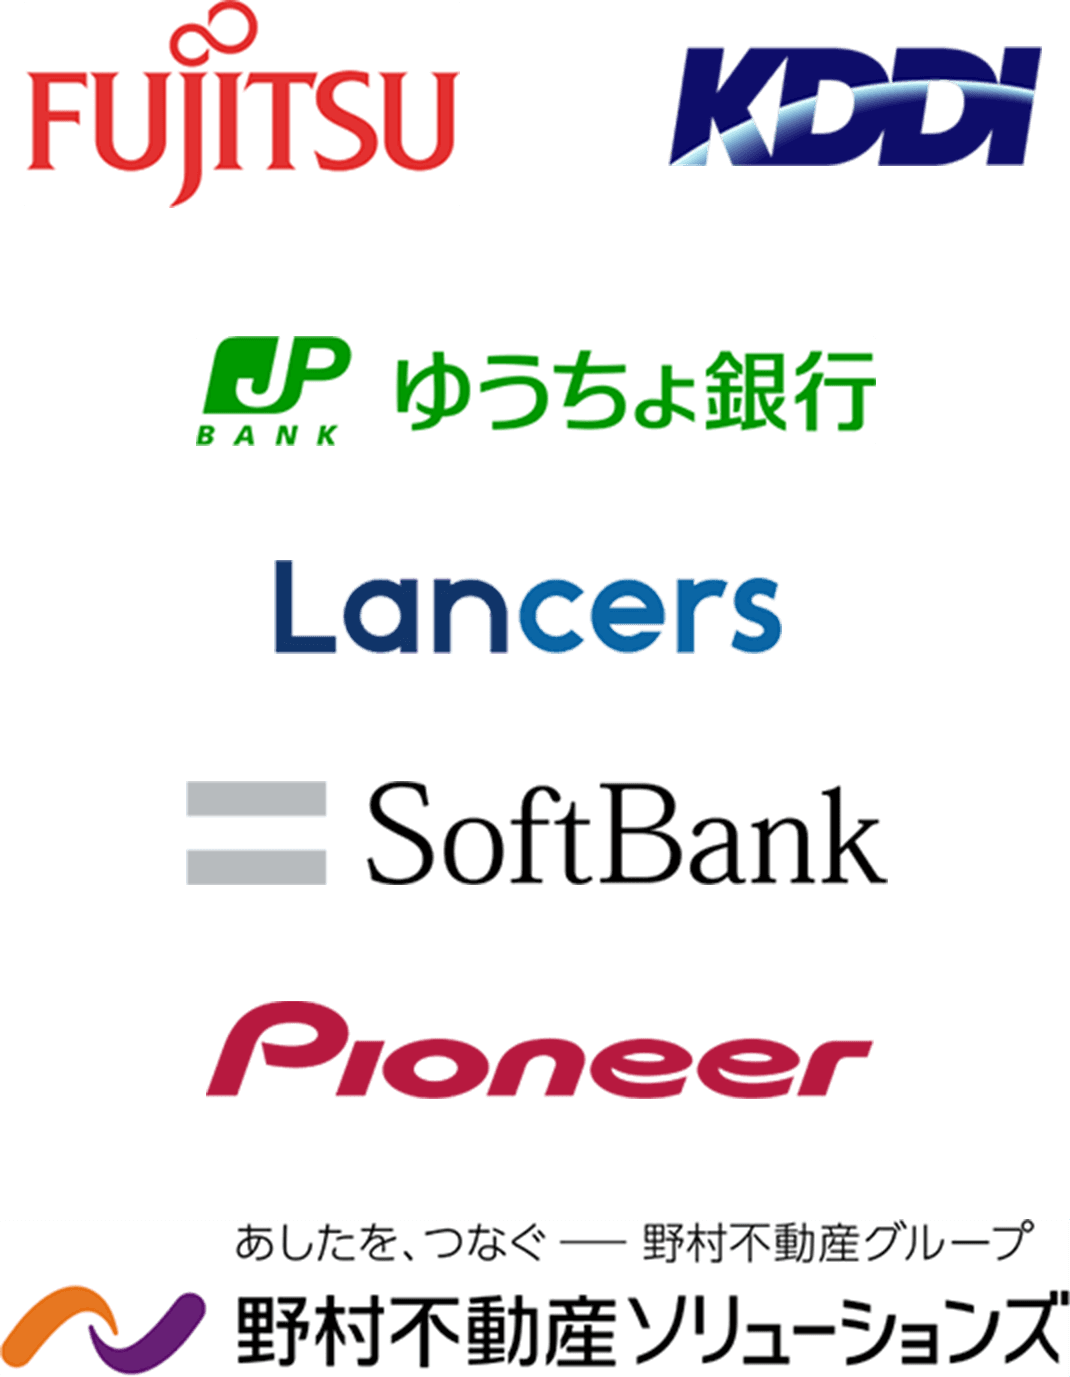 FUJITSU、KDDI、ちゅうちょ銀行、Lancers、SoftBank、Pioneer、野村不動産ソリューションズ